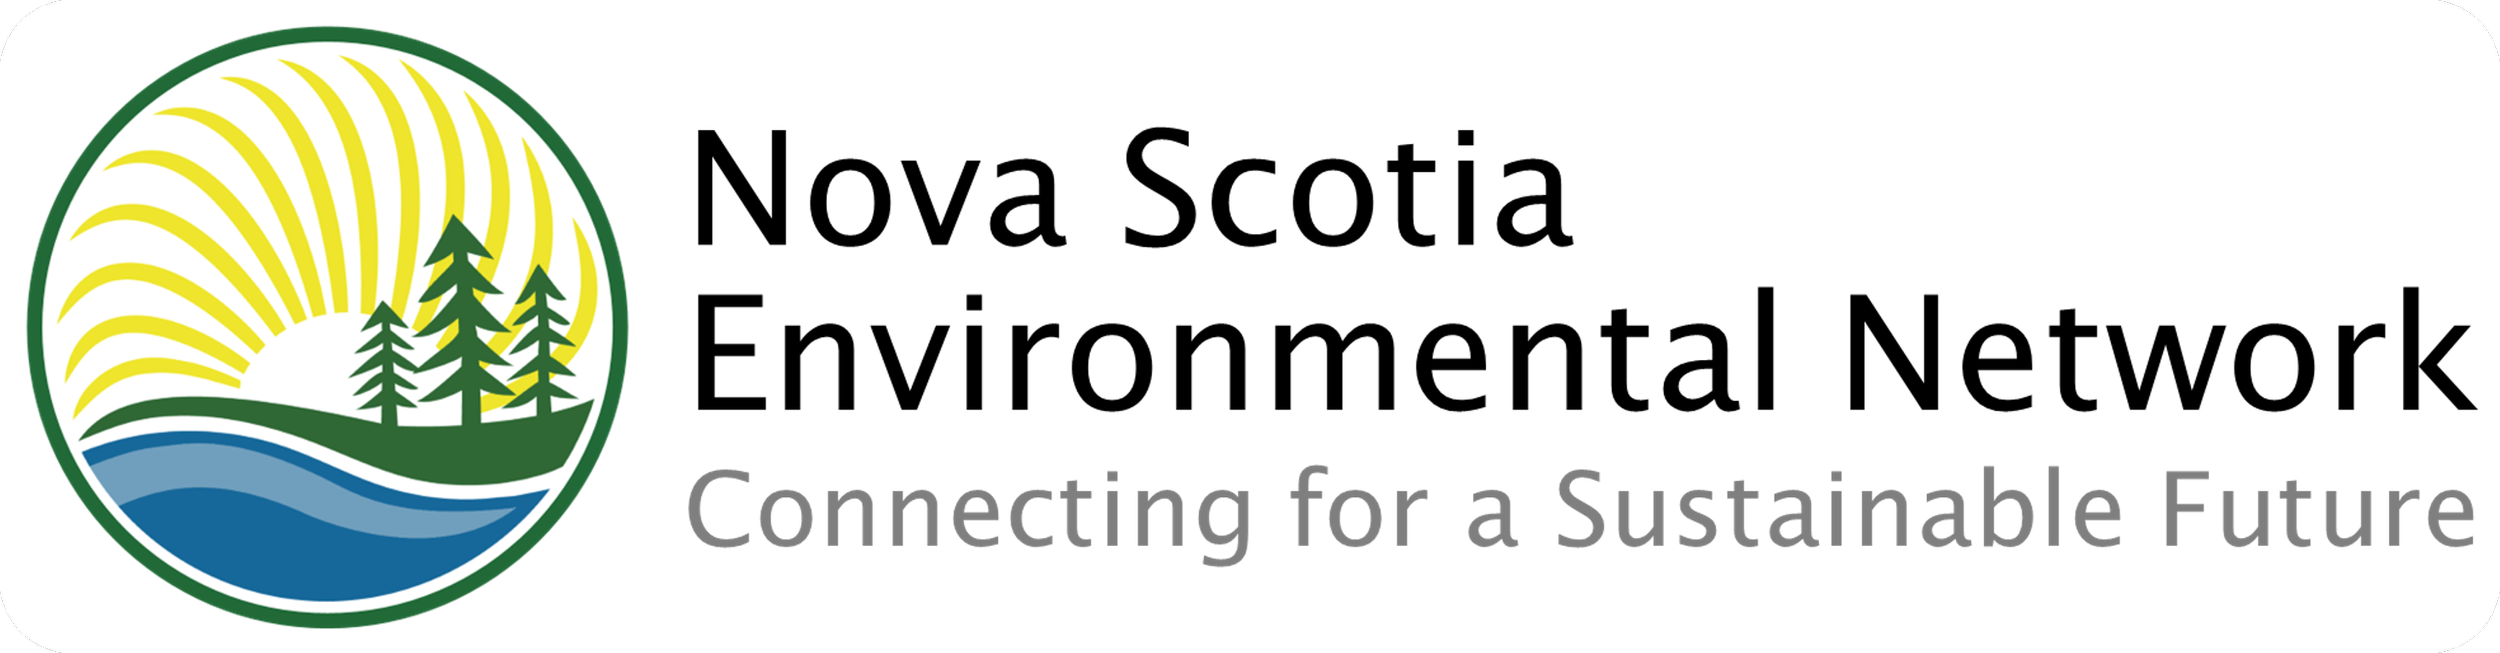 Nova Scotia Environmental Network